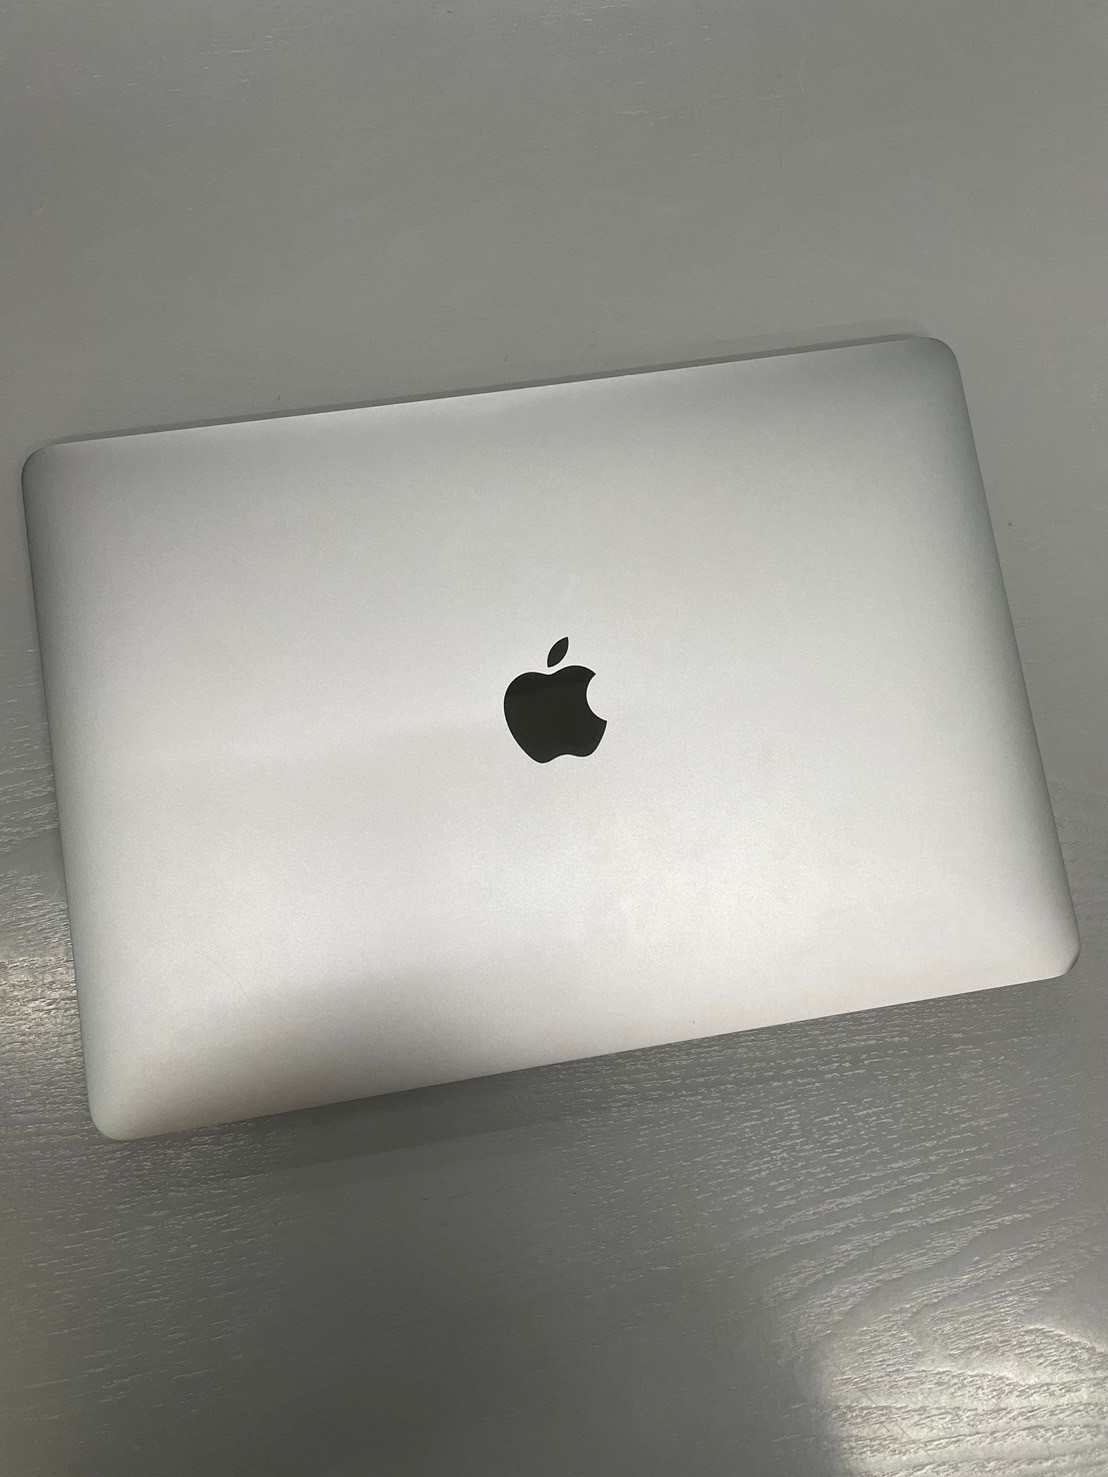 二手 2020 MacBook M1 Air 13吋 256G 灰